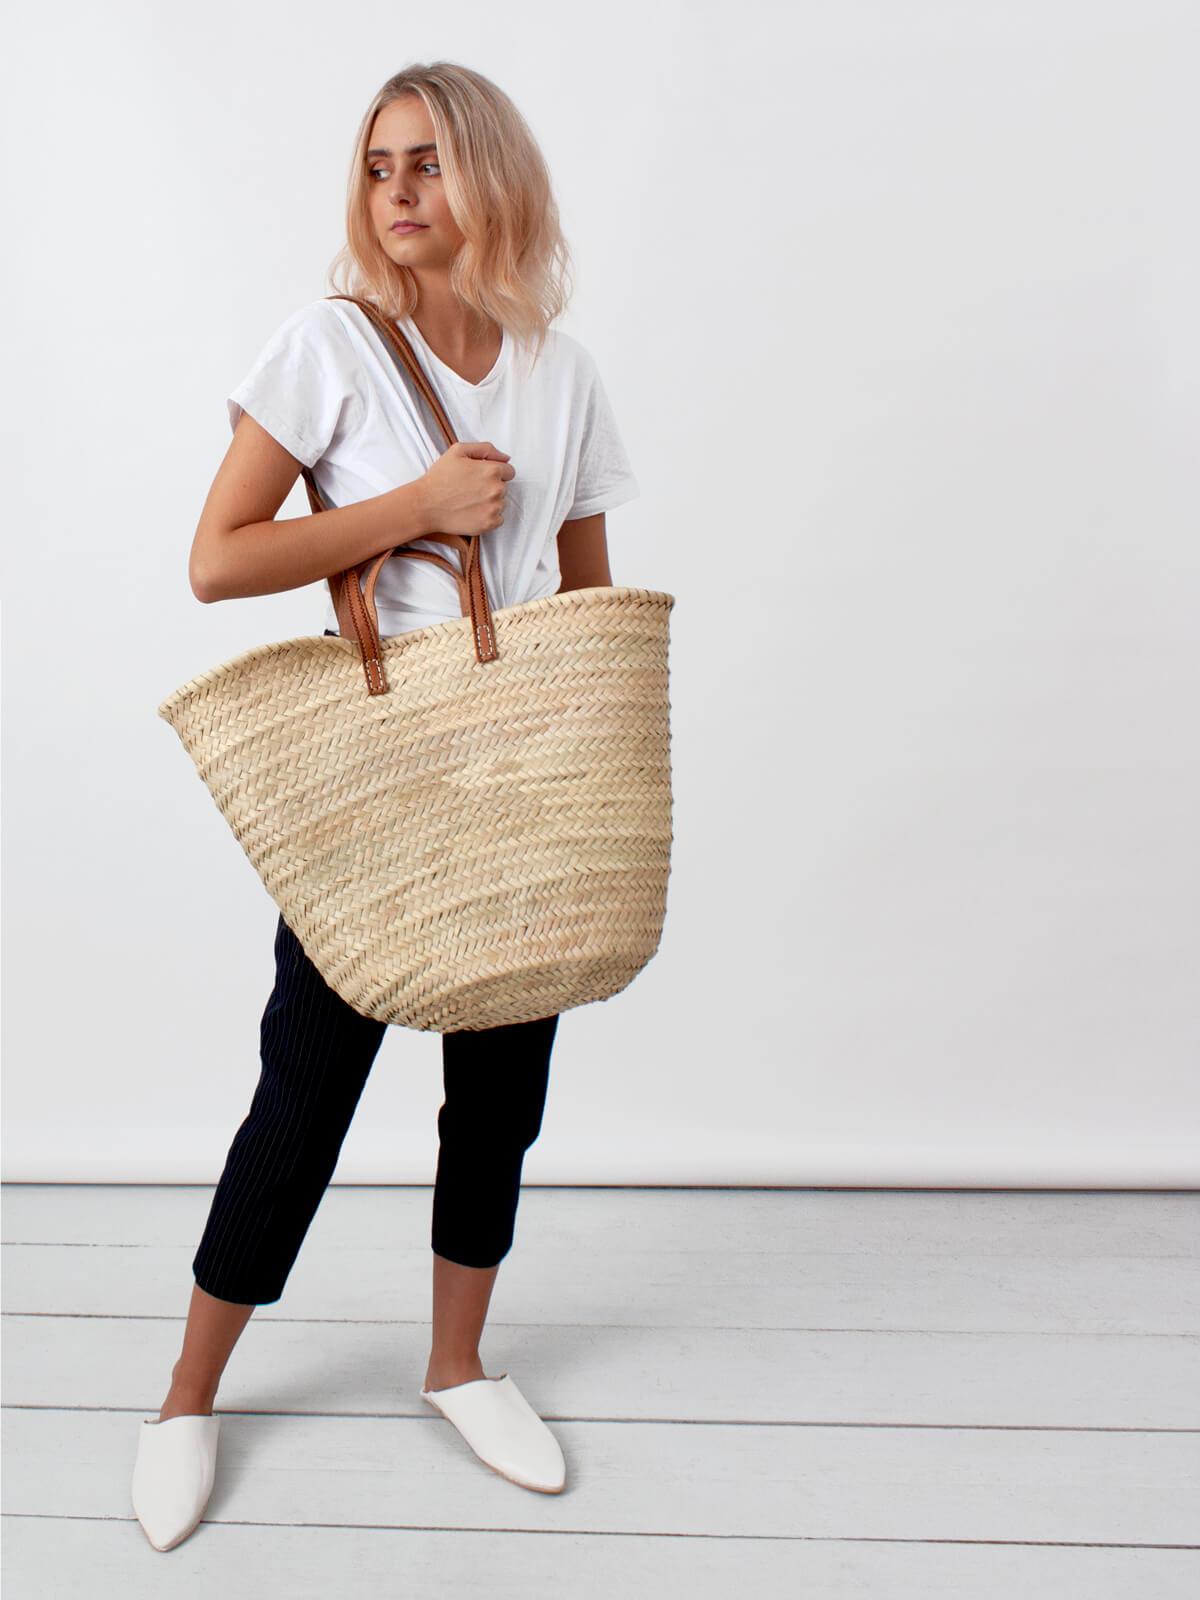 Parisienne Shopper Baskets